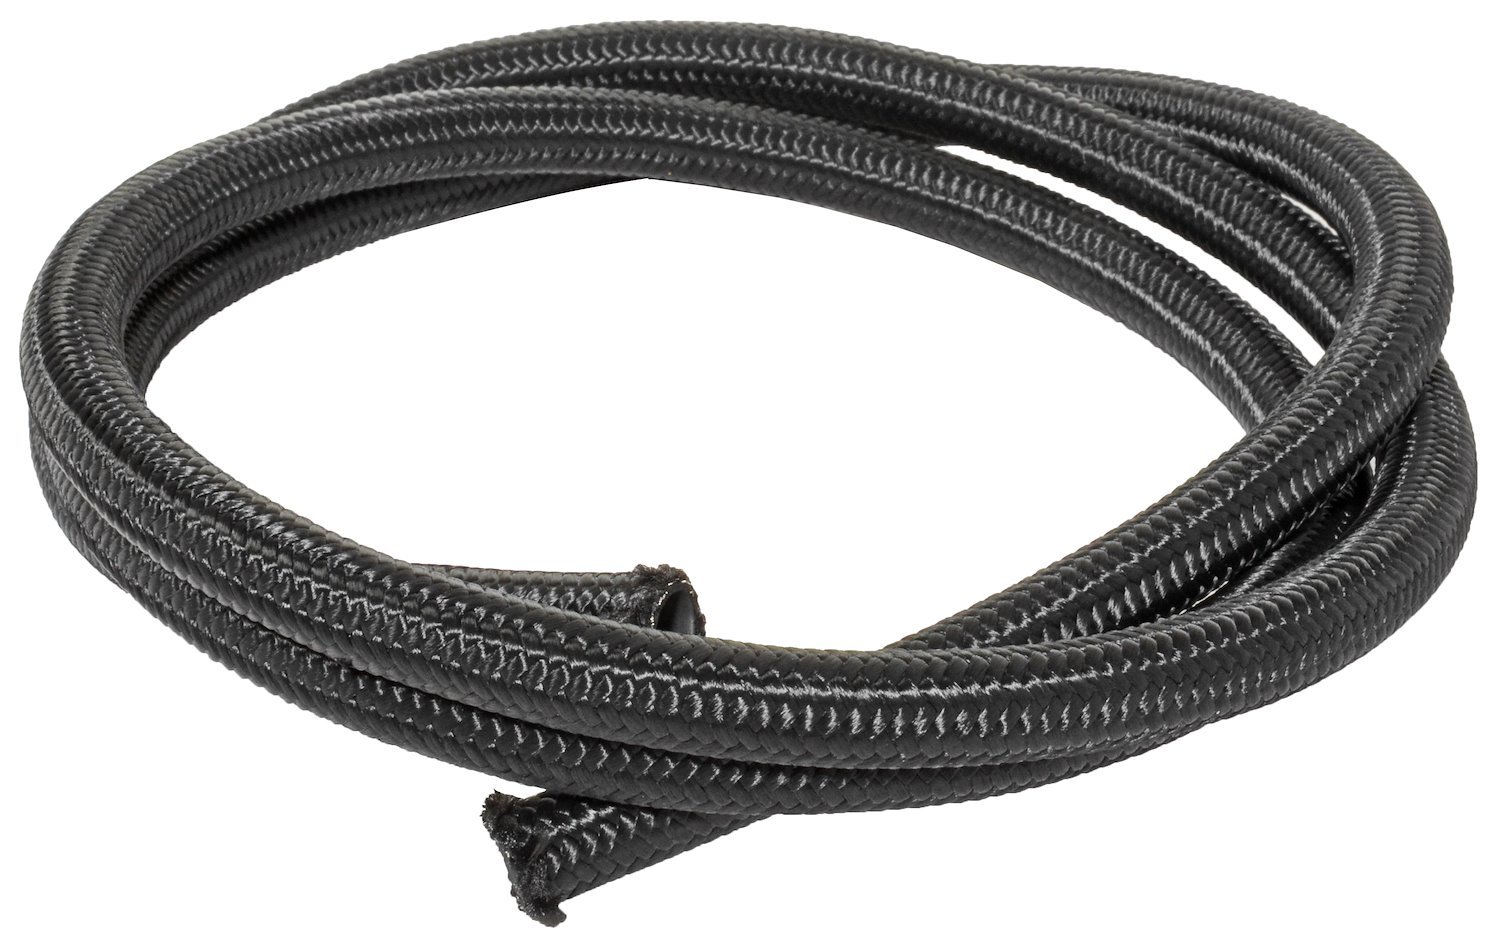 Pro-Flo 350 Black Nylon Braided Hose [-6 AN, 15 ft]